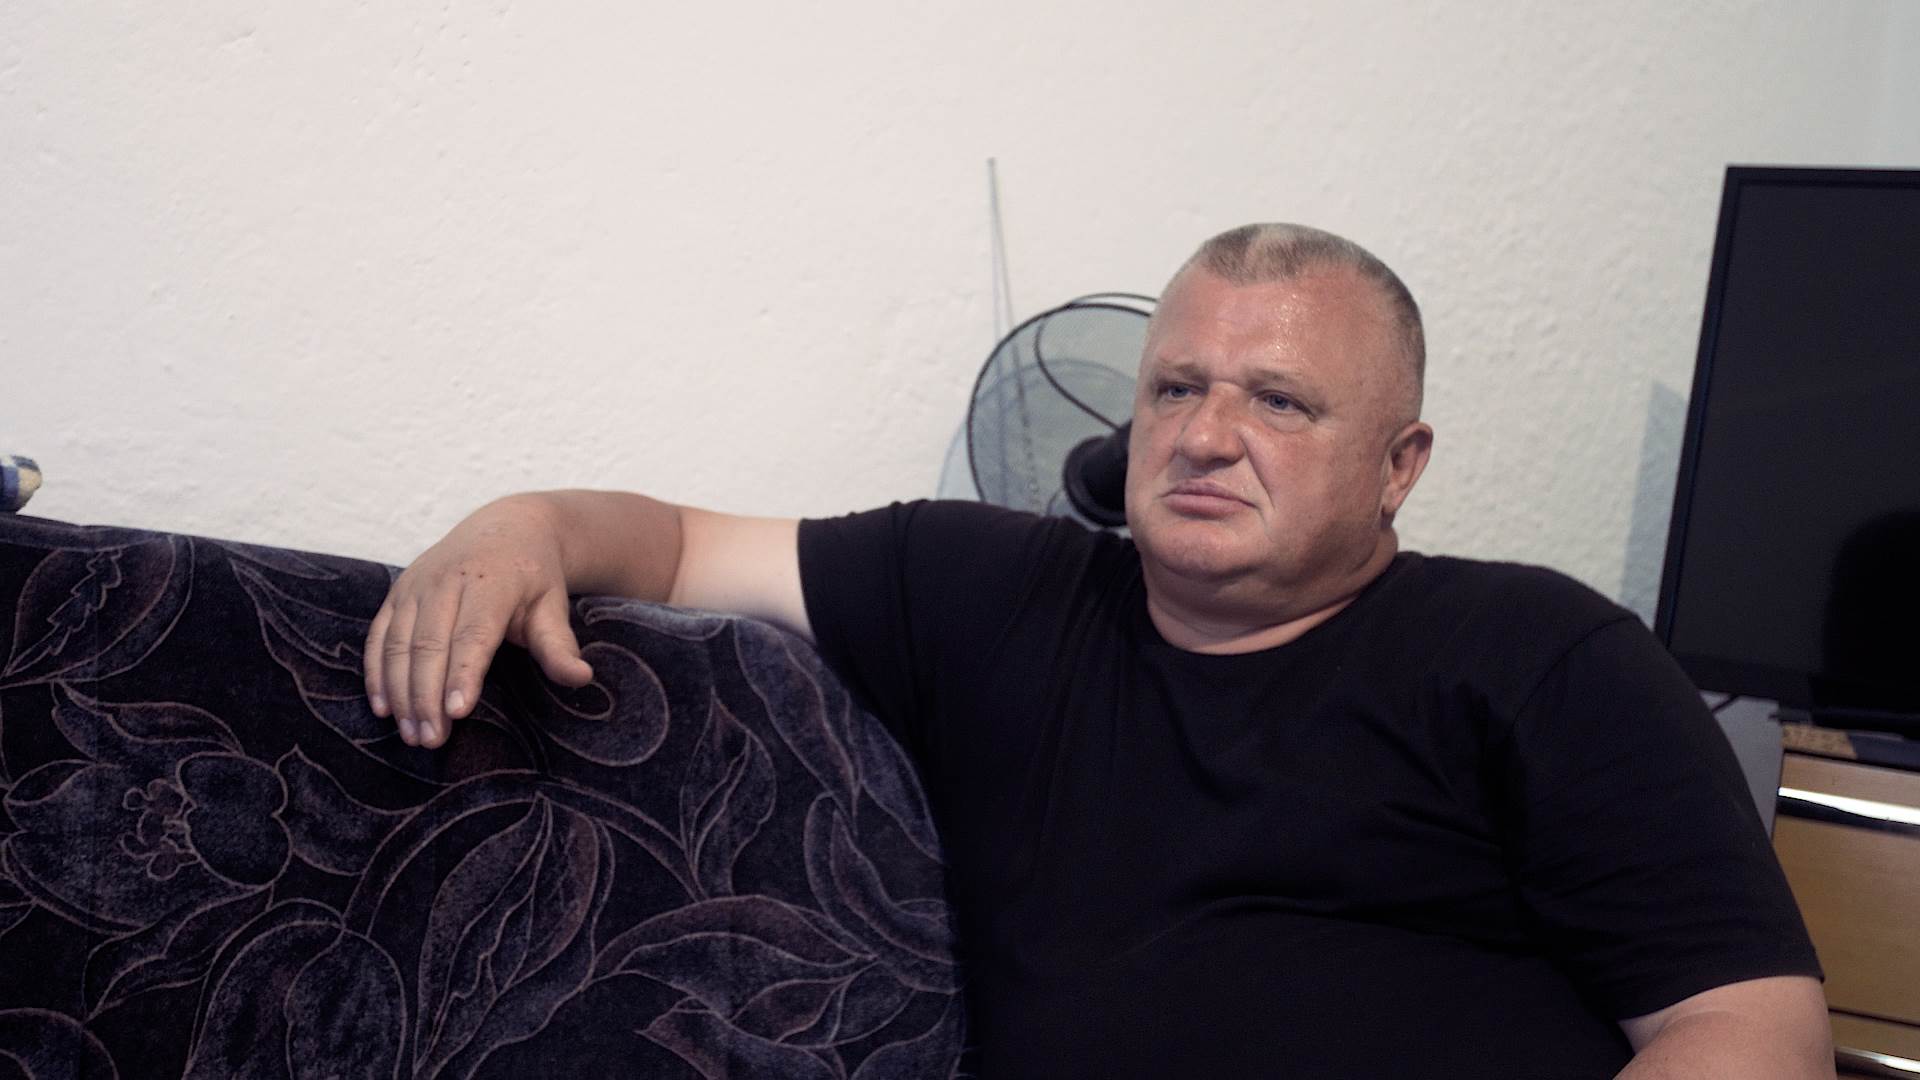  Policajac sa Maksimira Refik Ahmetović VIDEO: Ubio bih Zvonimira Bobana, intervju za MONDO 